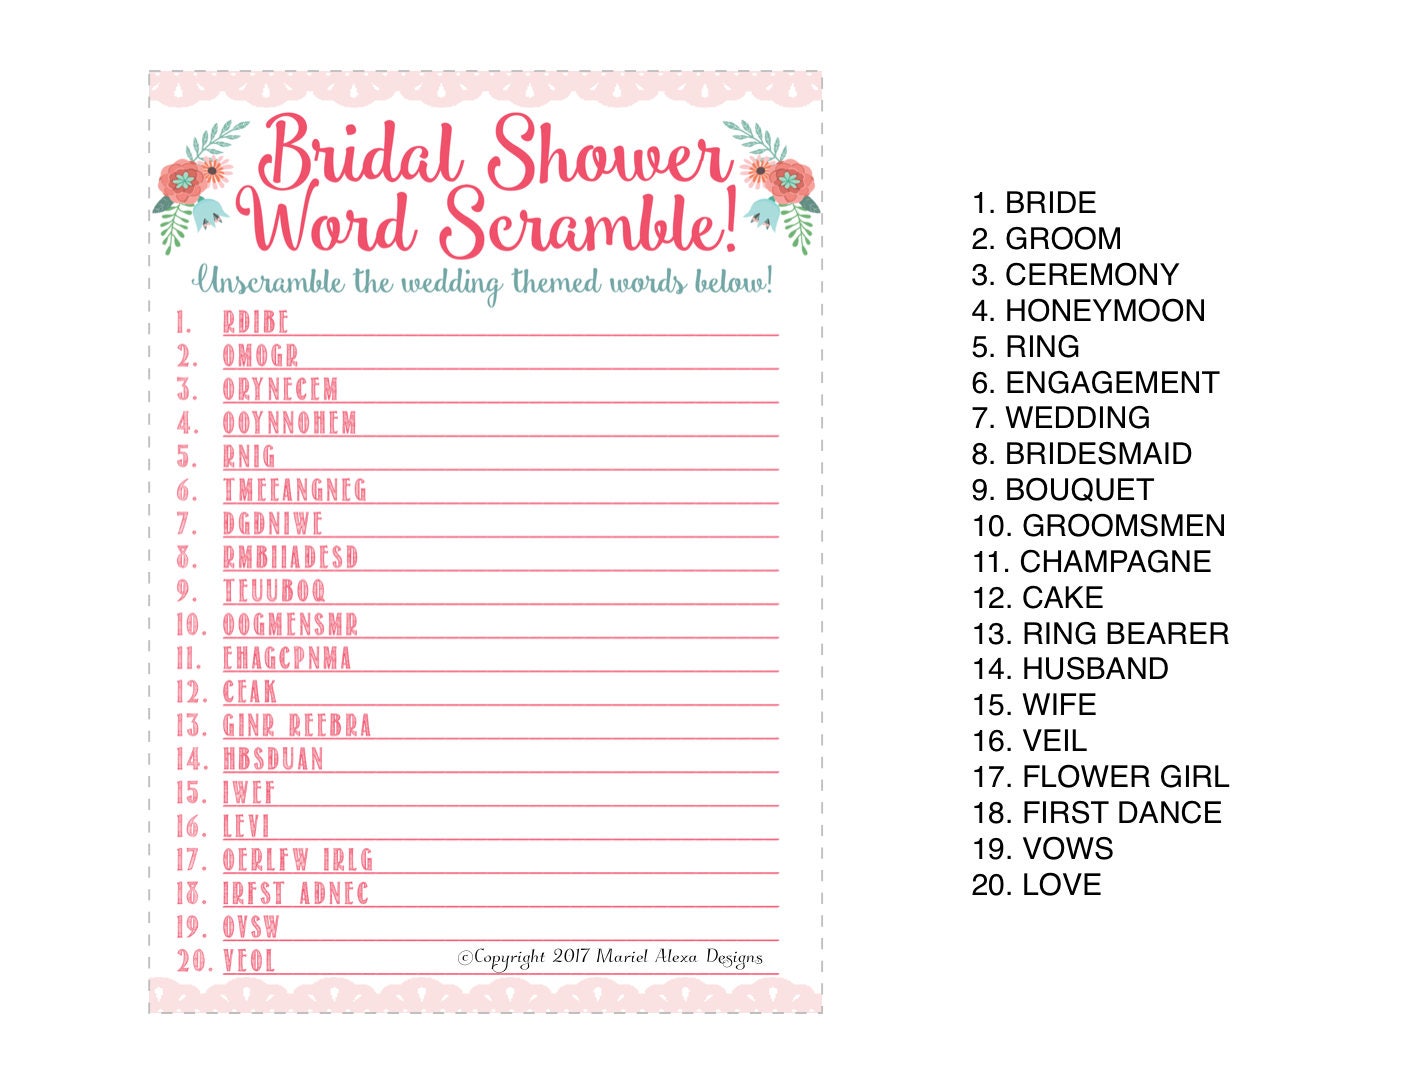 bridal-shower-word-scramble-game-fun-unique-games-diy-pdf